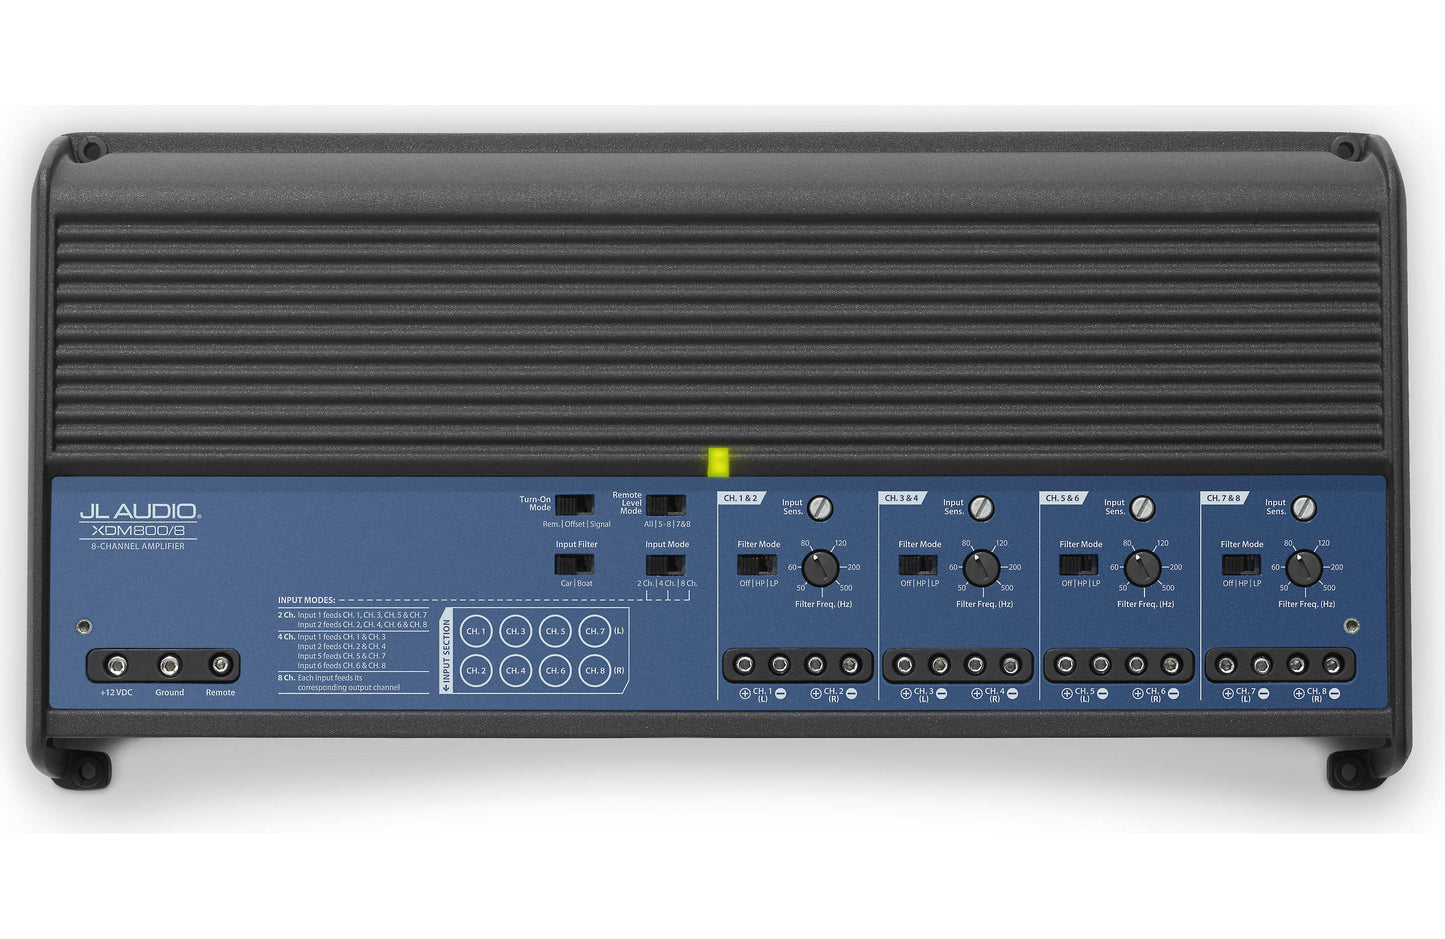 JL AUDIO XDM800/8v2 8-channel marine amplifier